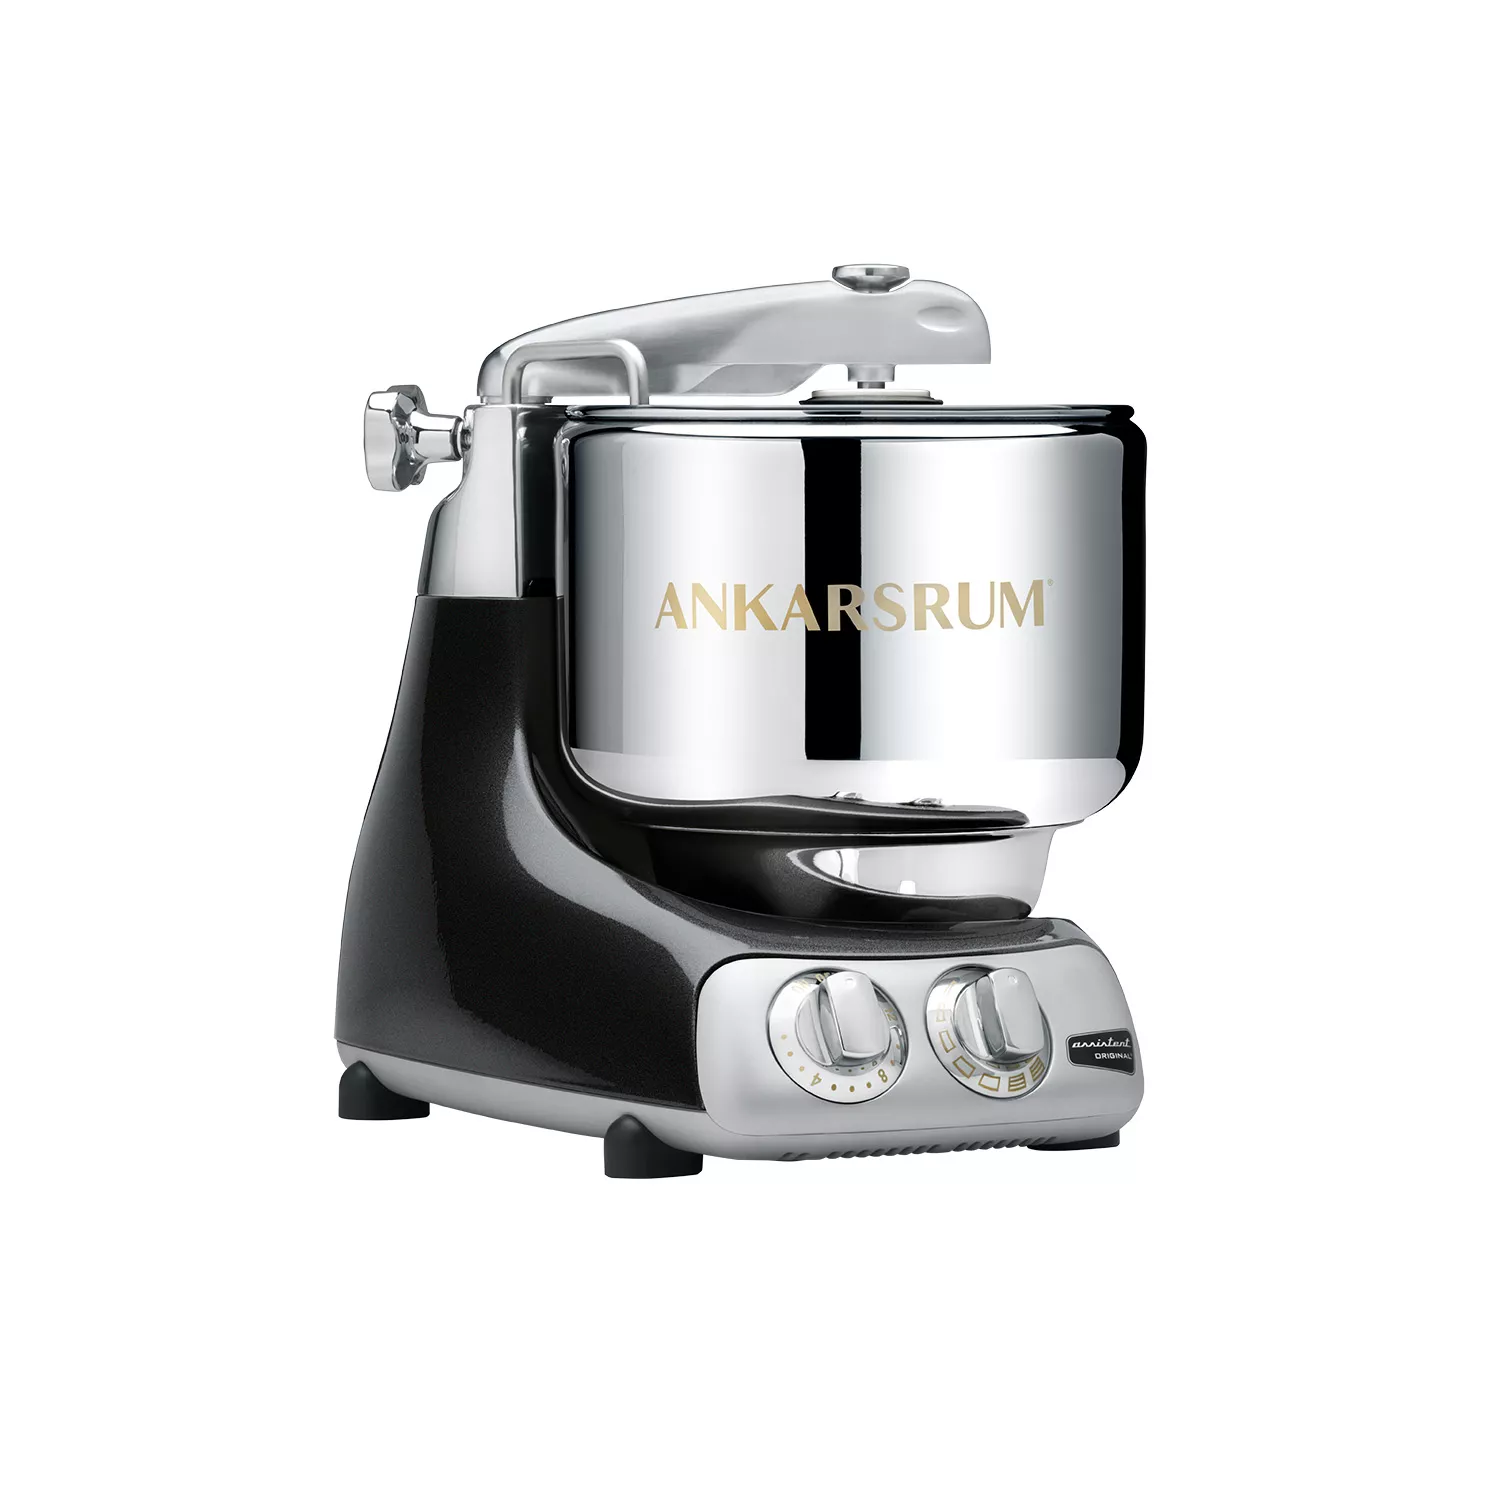 Ankarsrum Original Deluxe Stand Mixer / Kitchen Machine, 7.4-qt